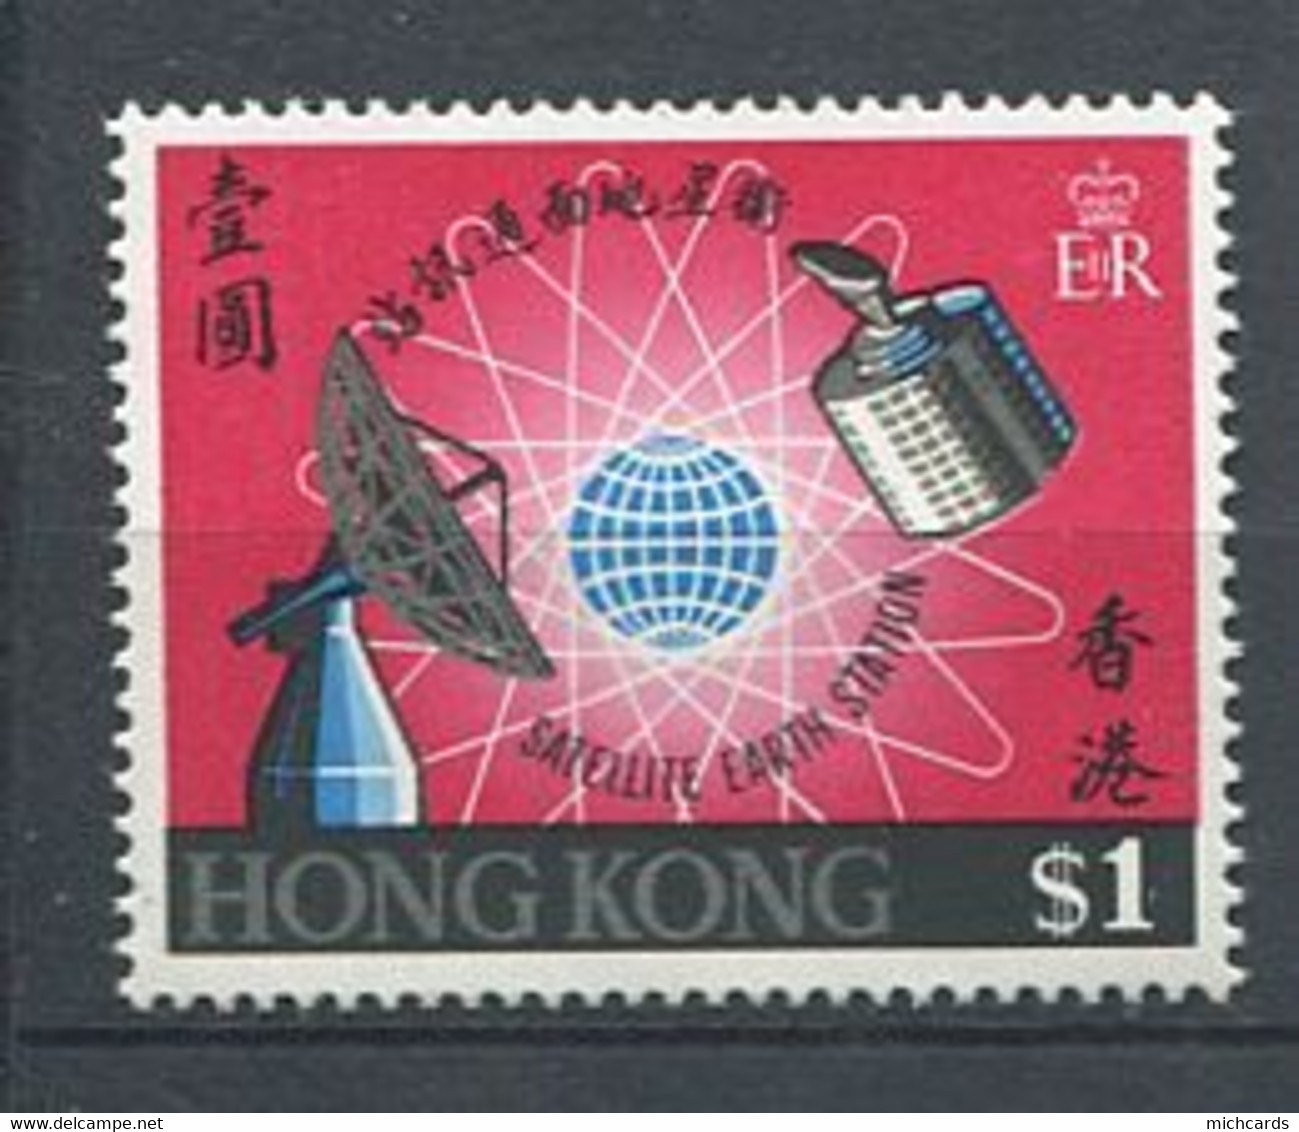 232 HONG KONG 1969 - Yvert 243 - Station Satellite Communication - Neuf ** (MNH) Sans Trace De Charniere - Ungebraucht